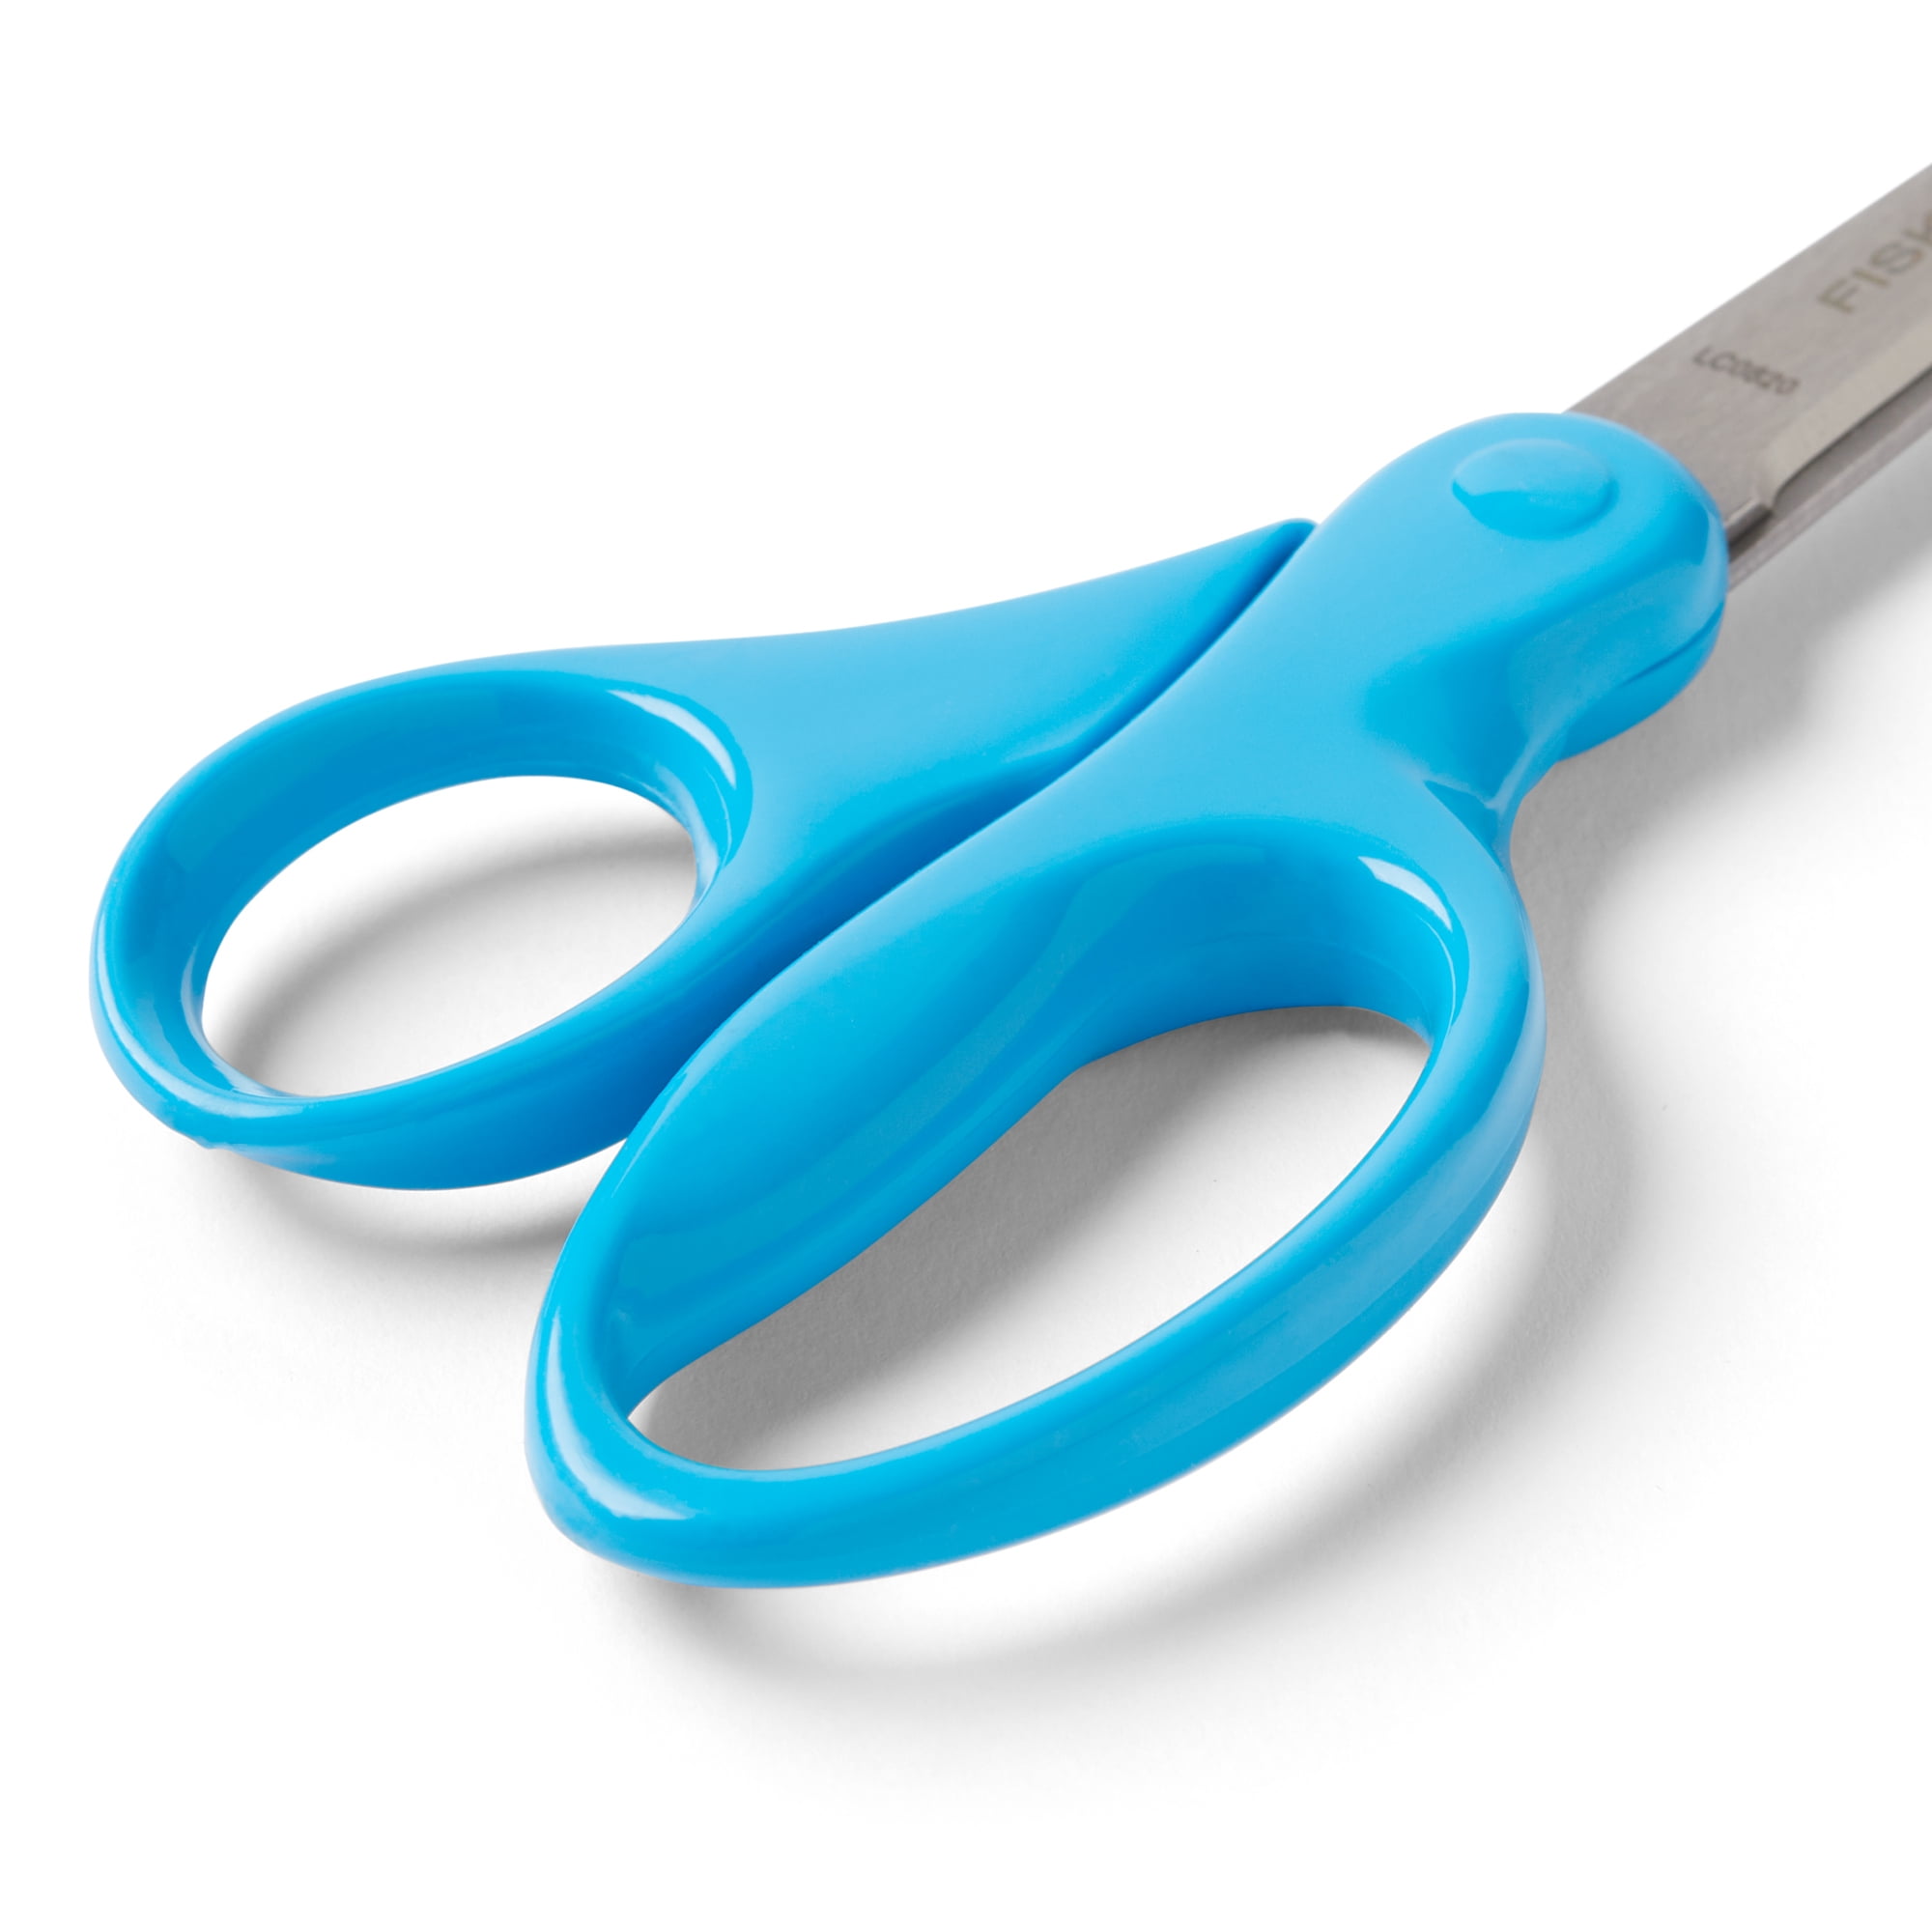 Fiskars Student Scissors - 2.75 Cutting Length - 7 Overall